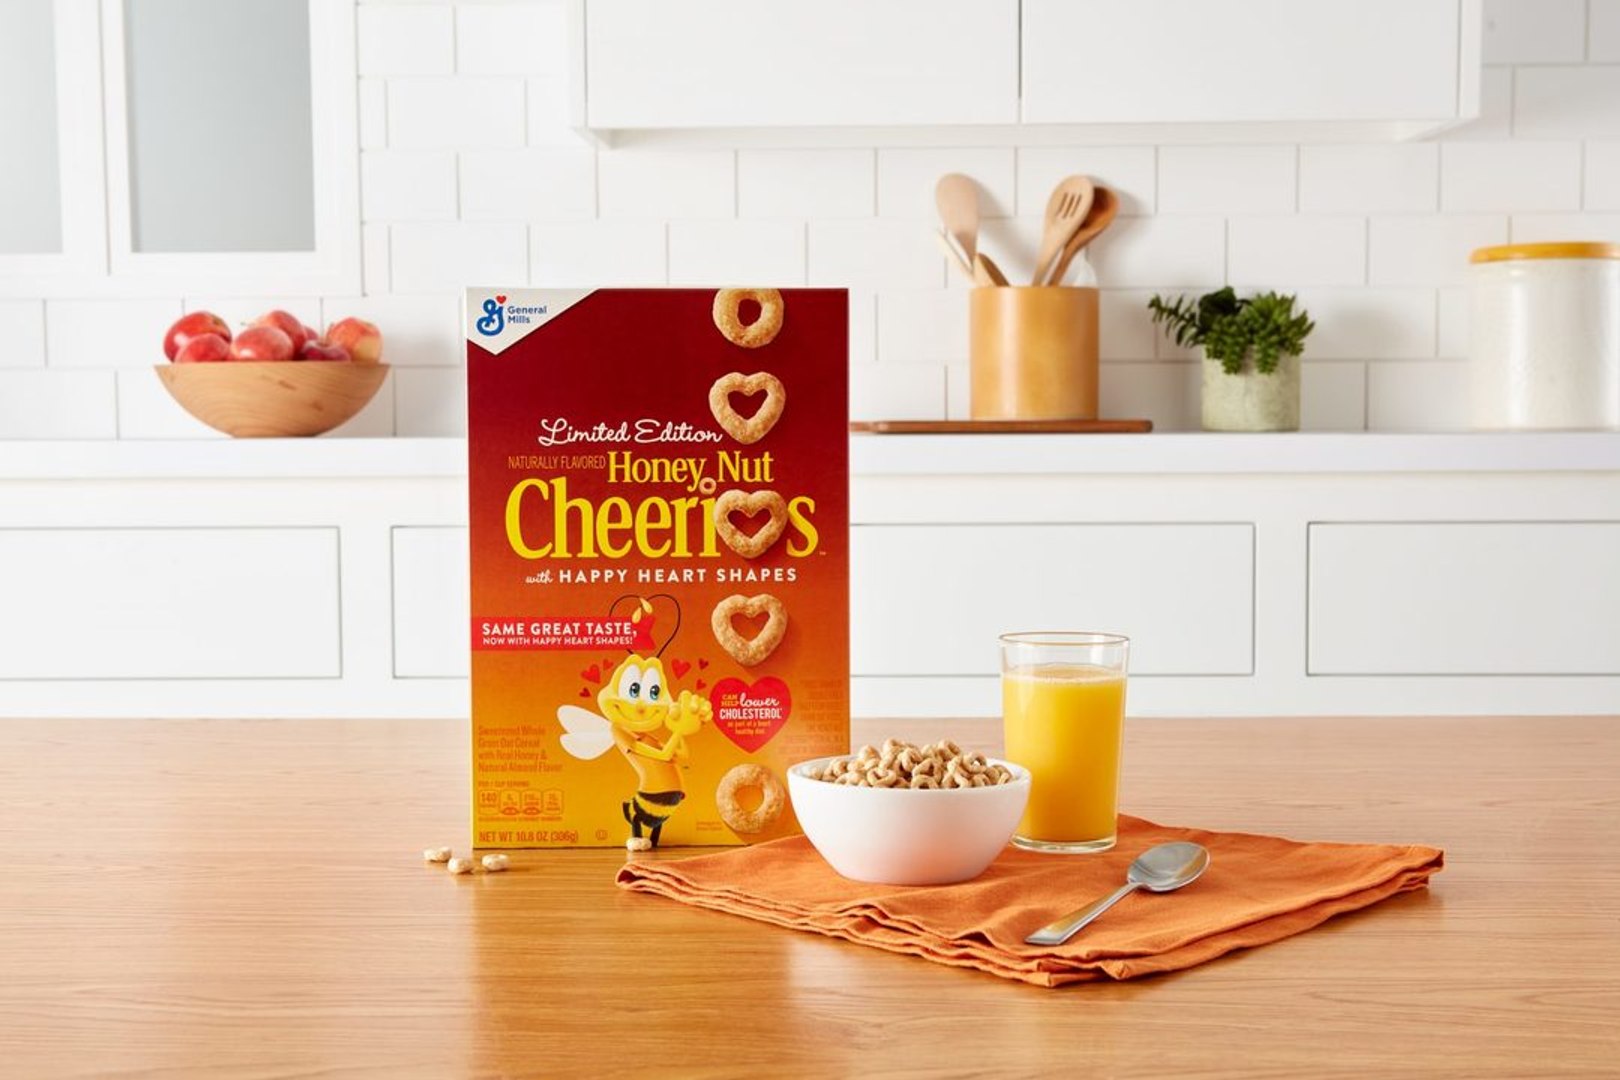 Heart-Shaped Honey Nut Cheerios Arrive in January 2020 - video Dailymotion